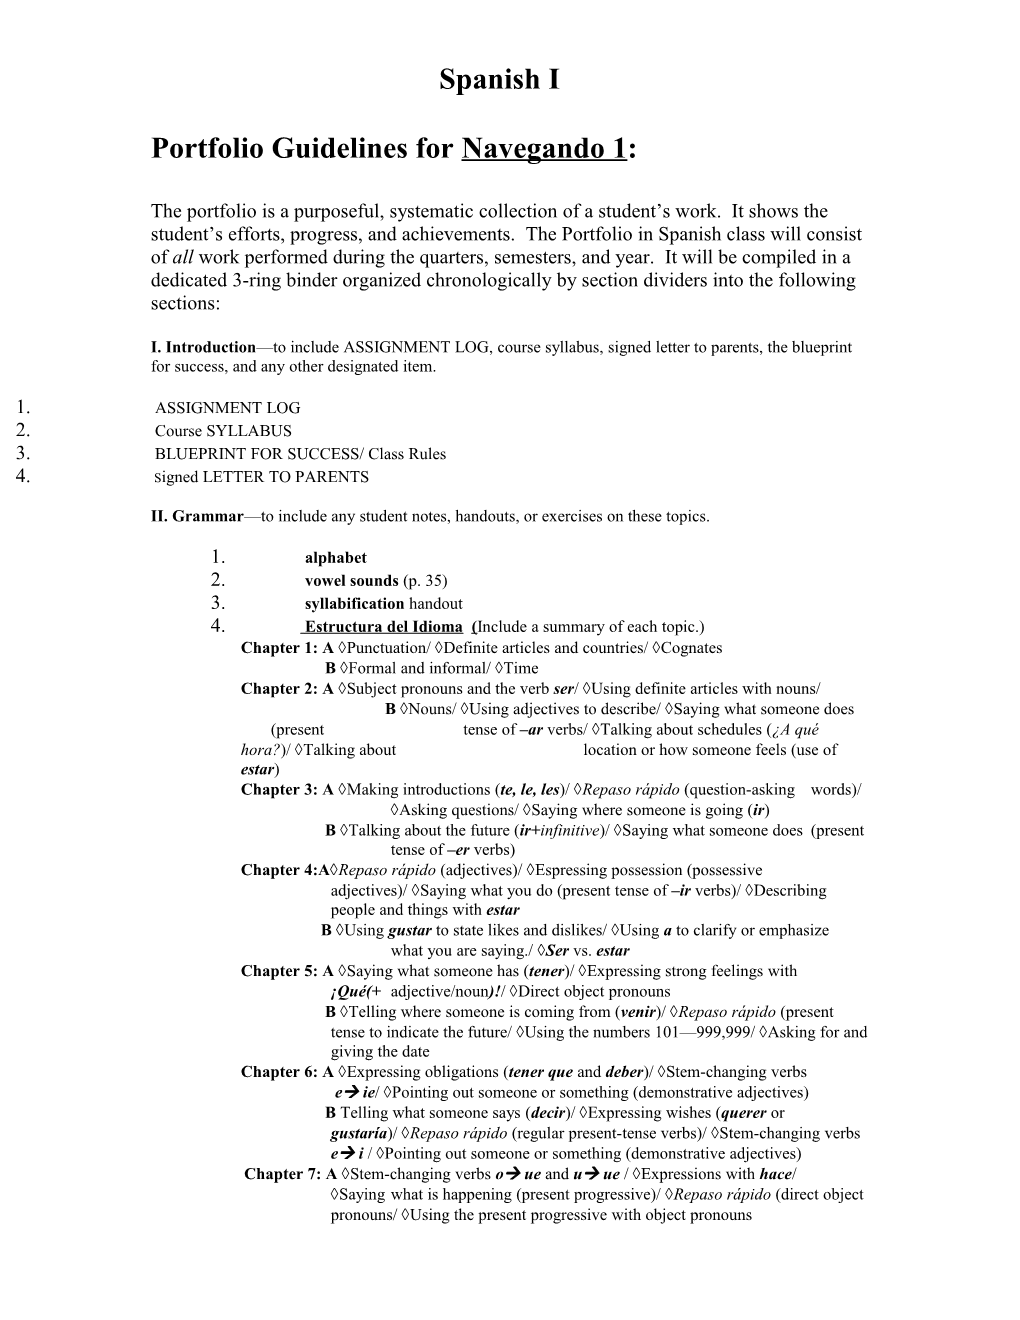 Portfolio Guidelines: Spanish 2004-2005